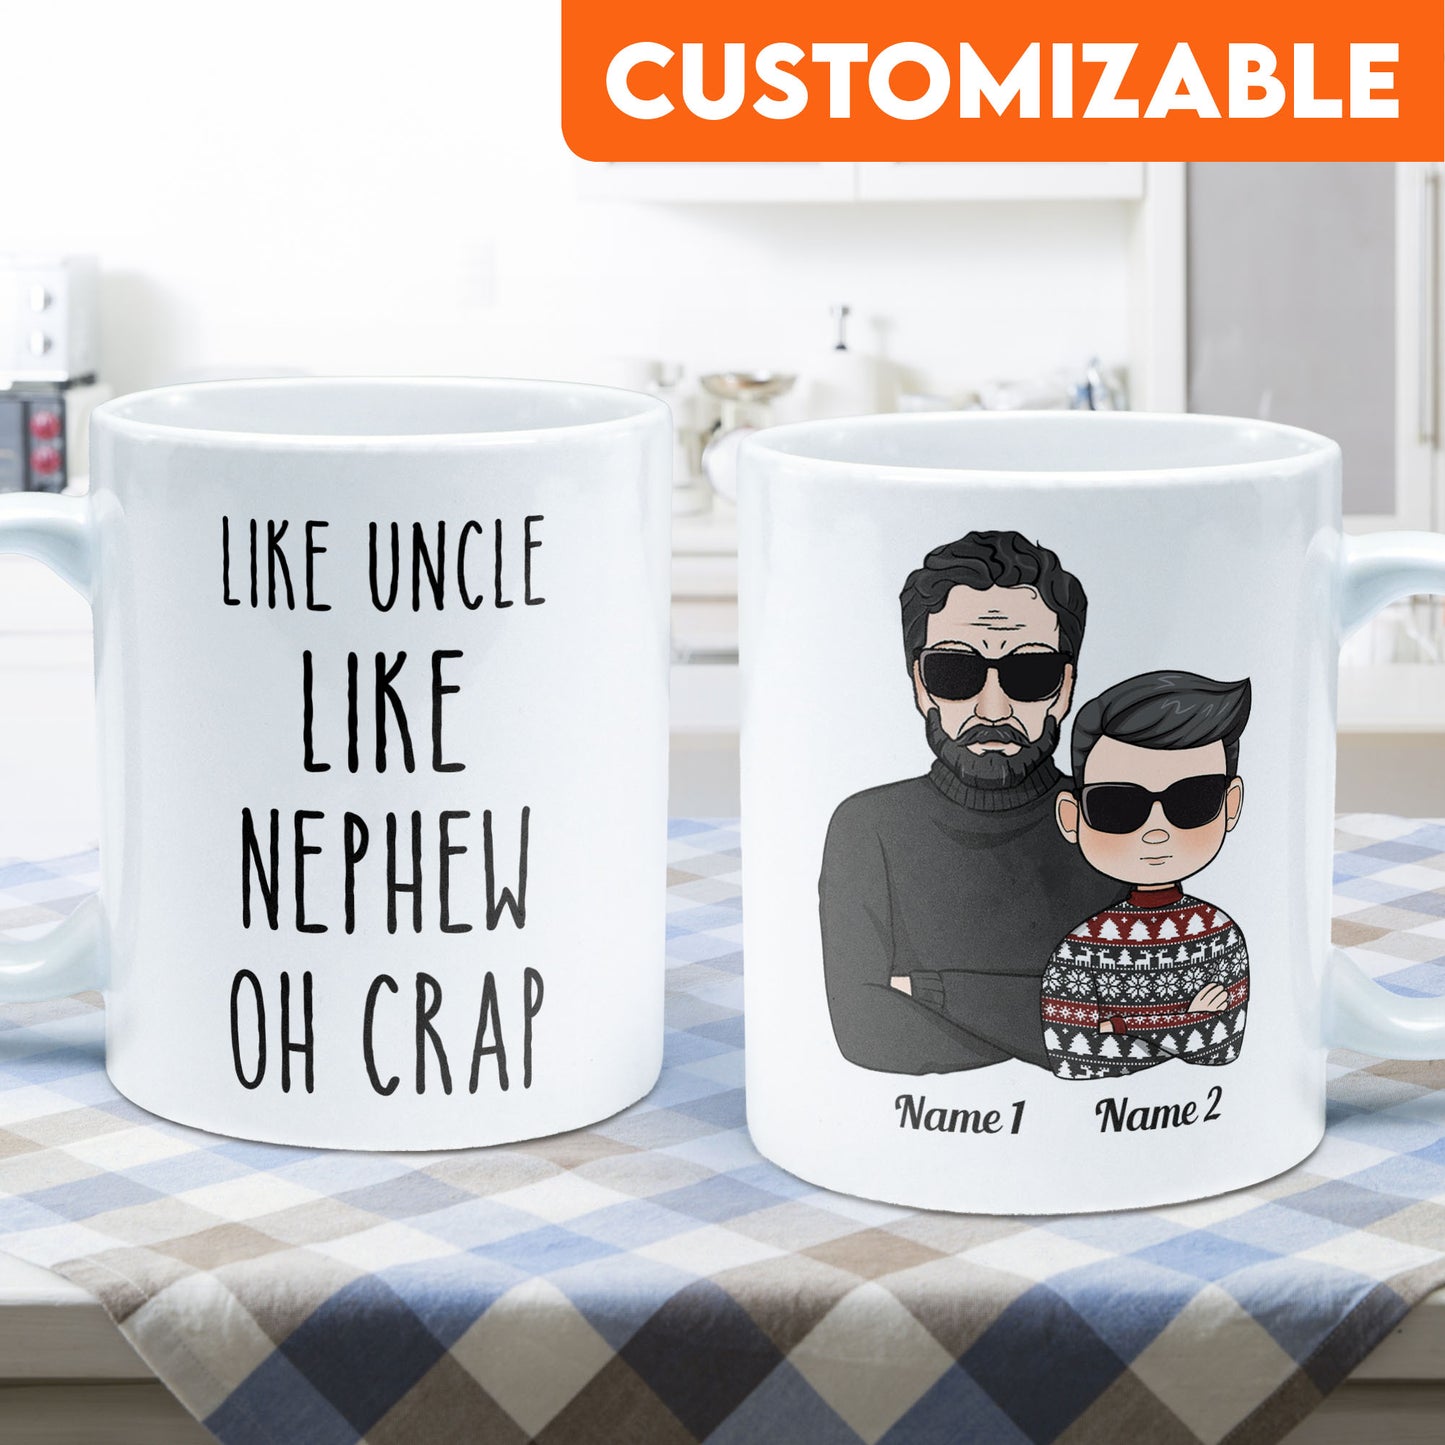 Like Uncle Like Nephew Oh Crap - Personalized Mug